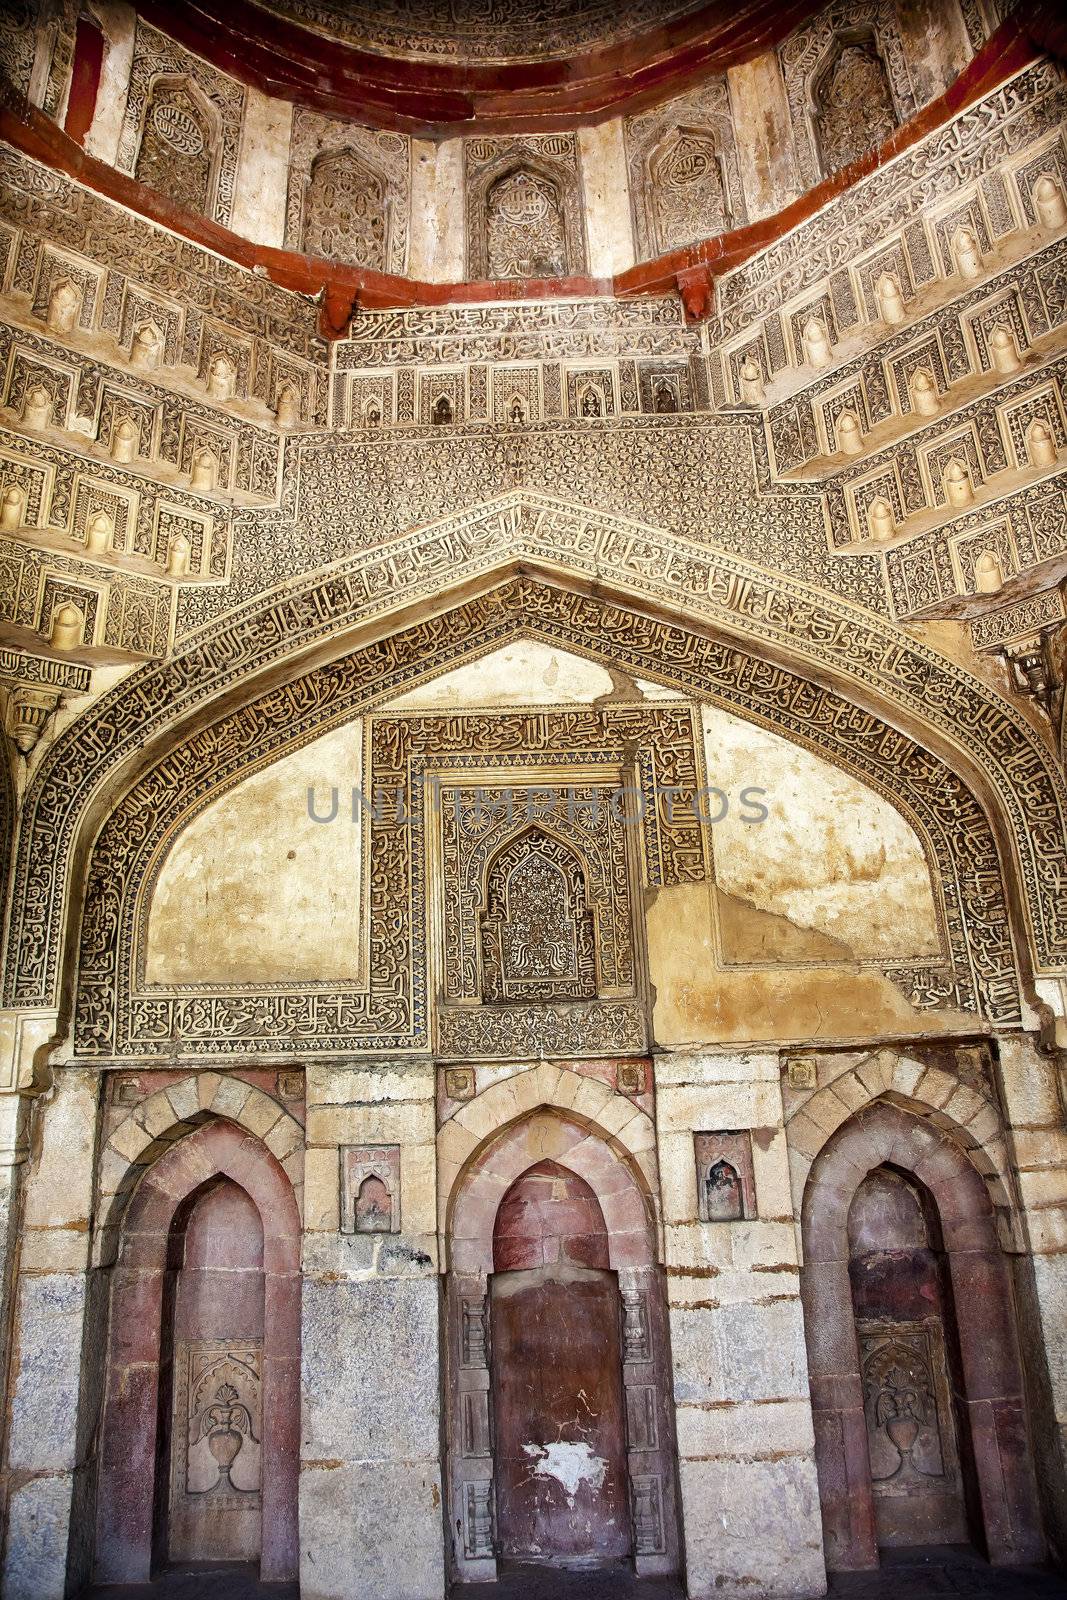 Decorations Inside Sheesh Shish Gumbad Tomb Lodi Gardens New Delhi India by bill_perry